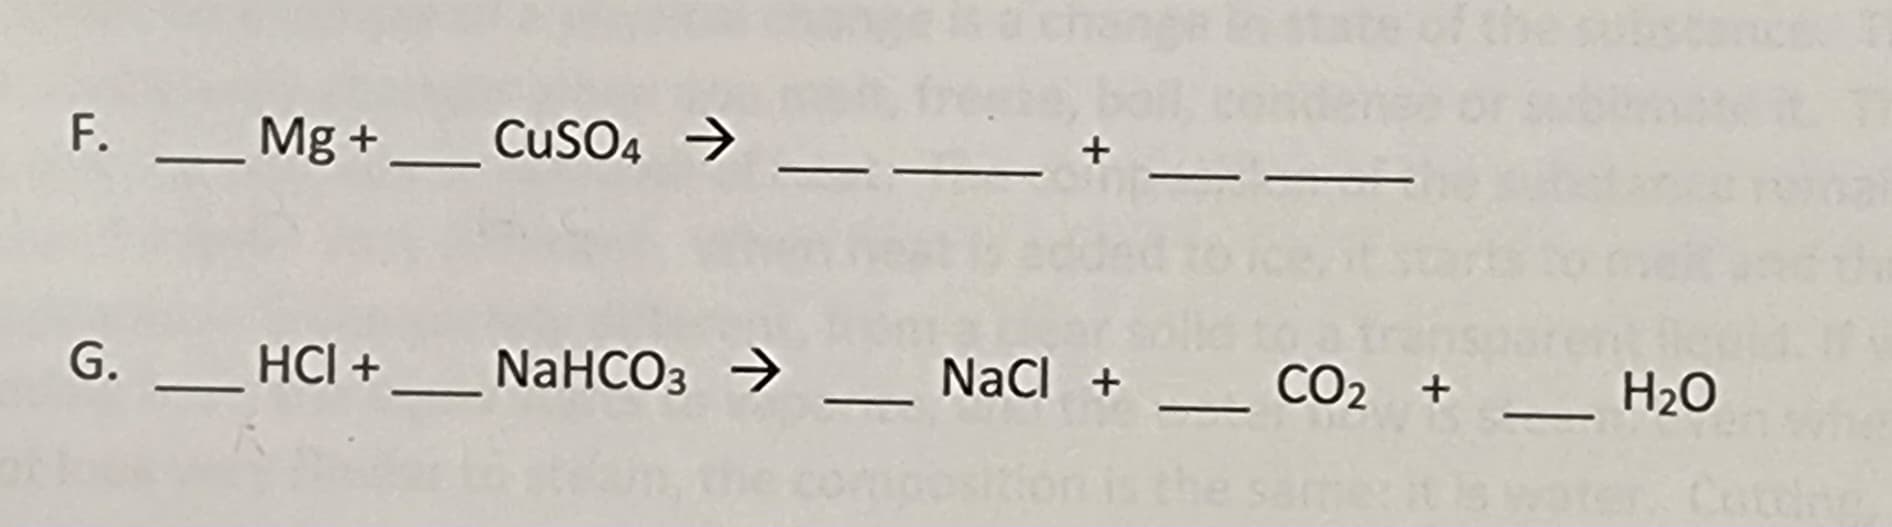 F.Mg +_ CuSO4 →
G. ___ HCl + ____ NaHCO3 →
e, boll
NaCl + — CO₂ + _
H₂O